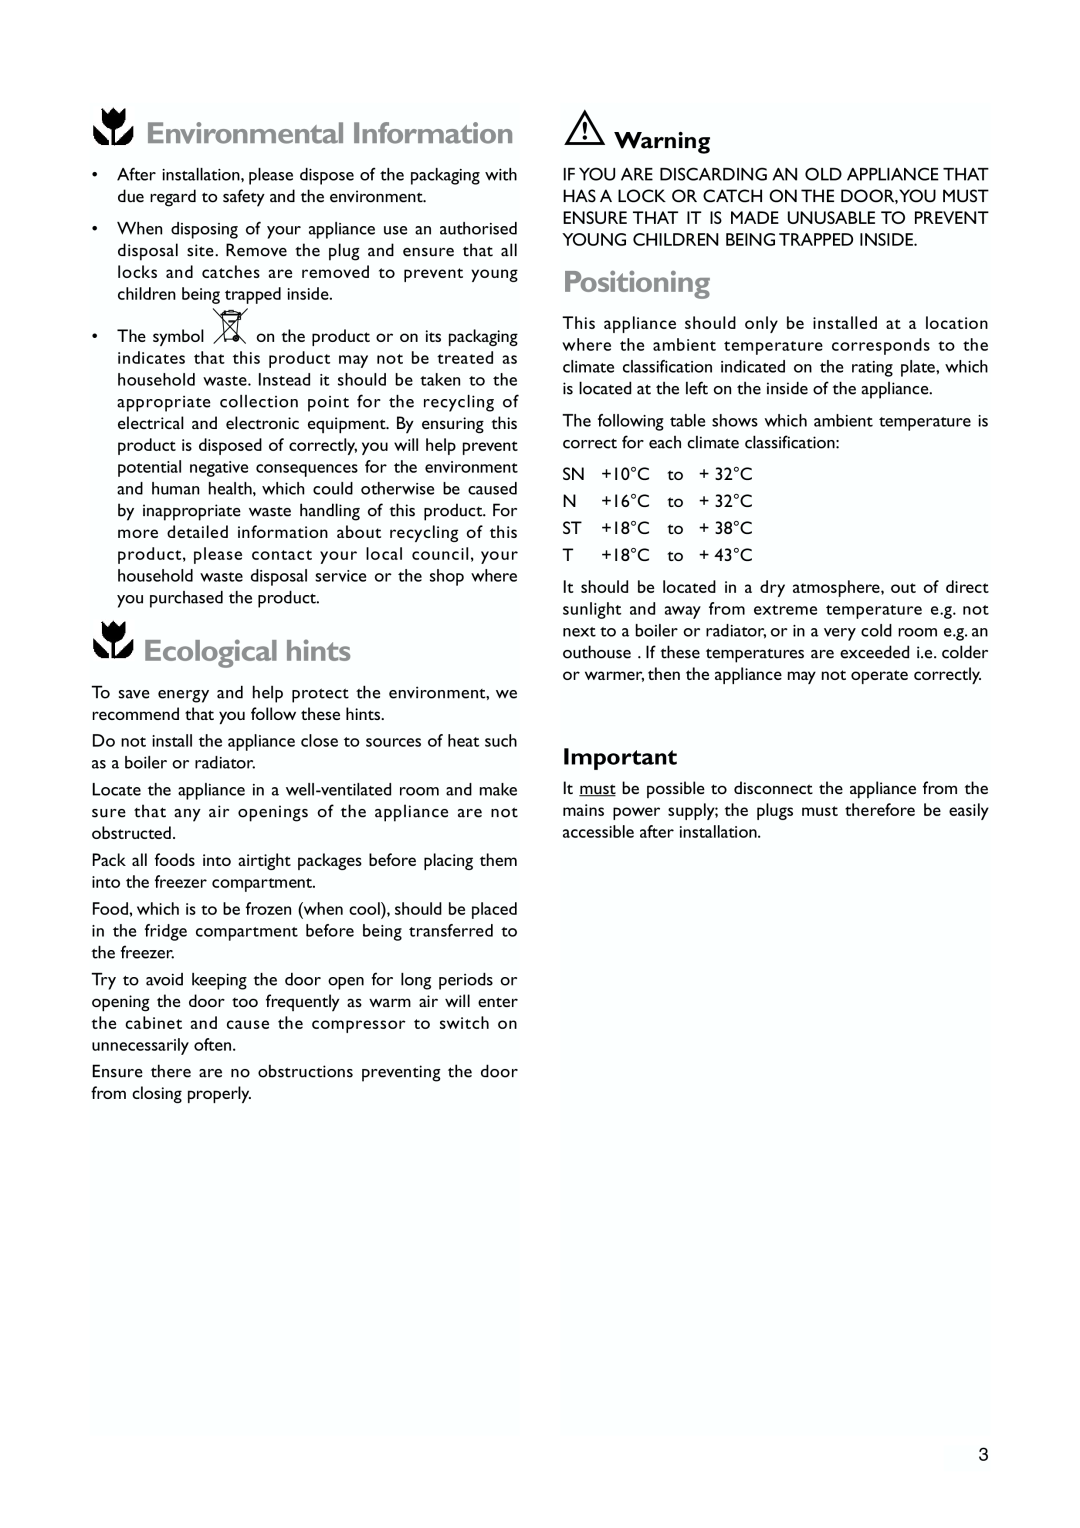 John Lewis JLWFF1101 instruction manual Environmental Information, Ecological hints, Positioning 